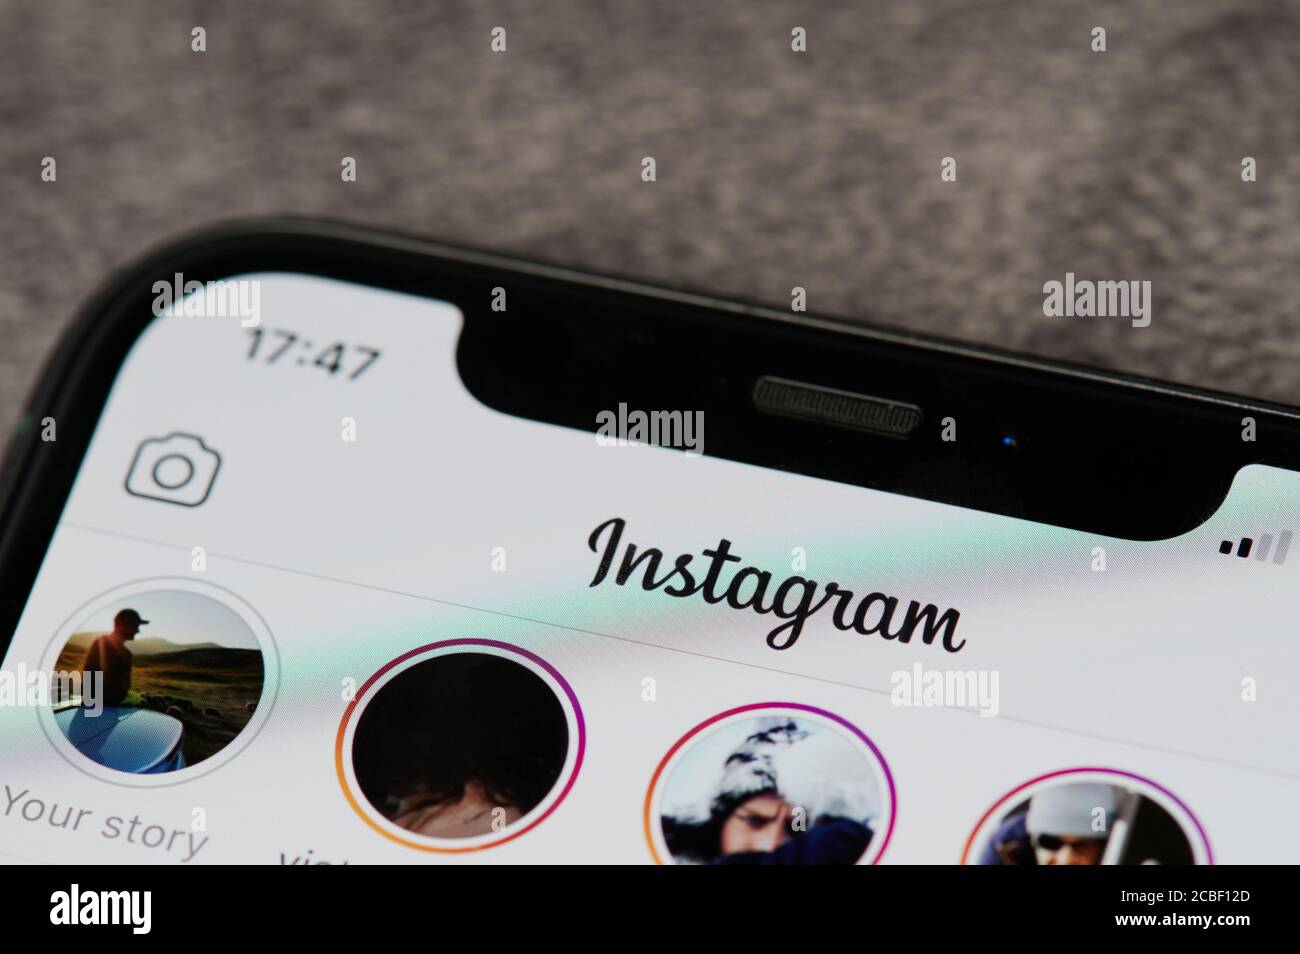 New york, USA - 12. august 2020: Instagram Stories auf dem iphone Smartphone Makro Nahaufnahme im Bildschirm Stockfoto